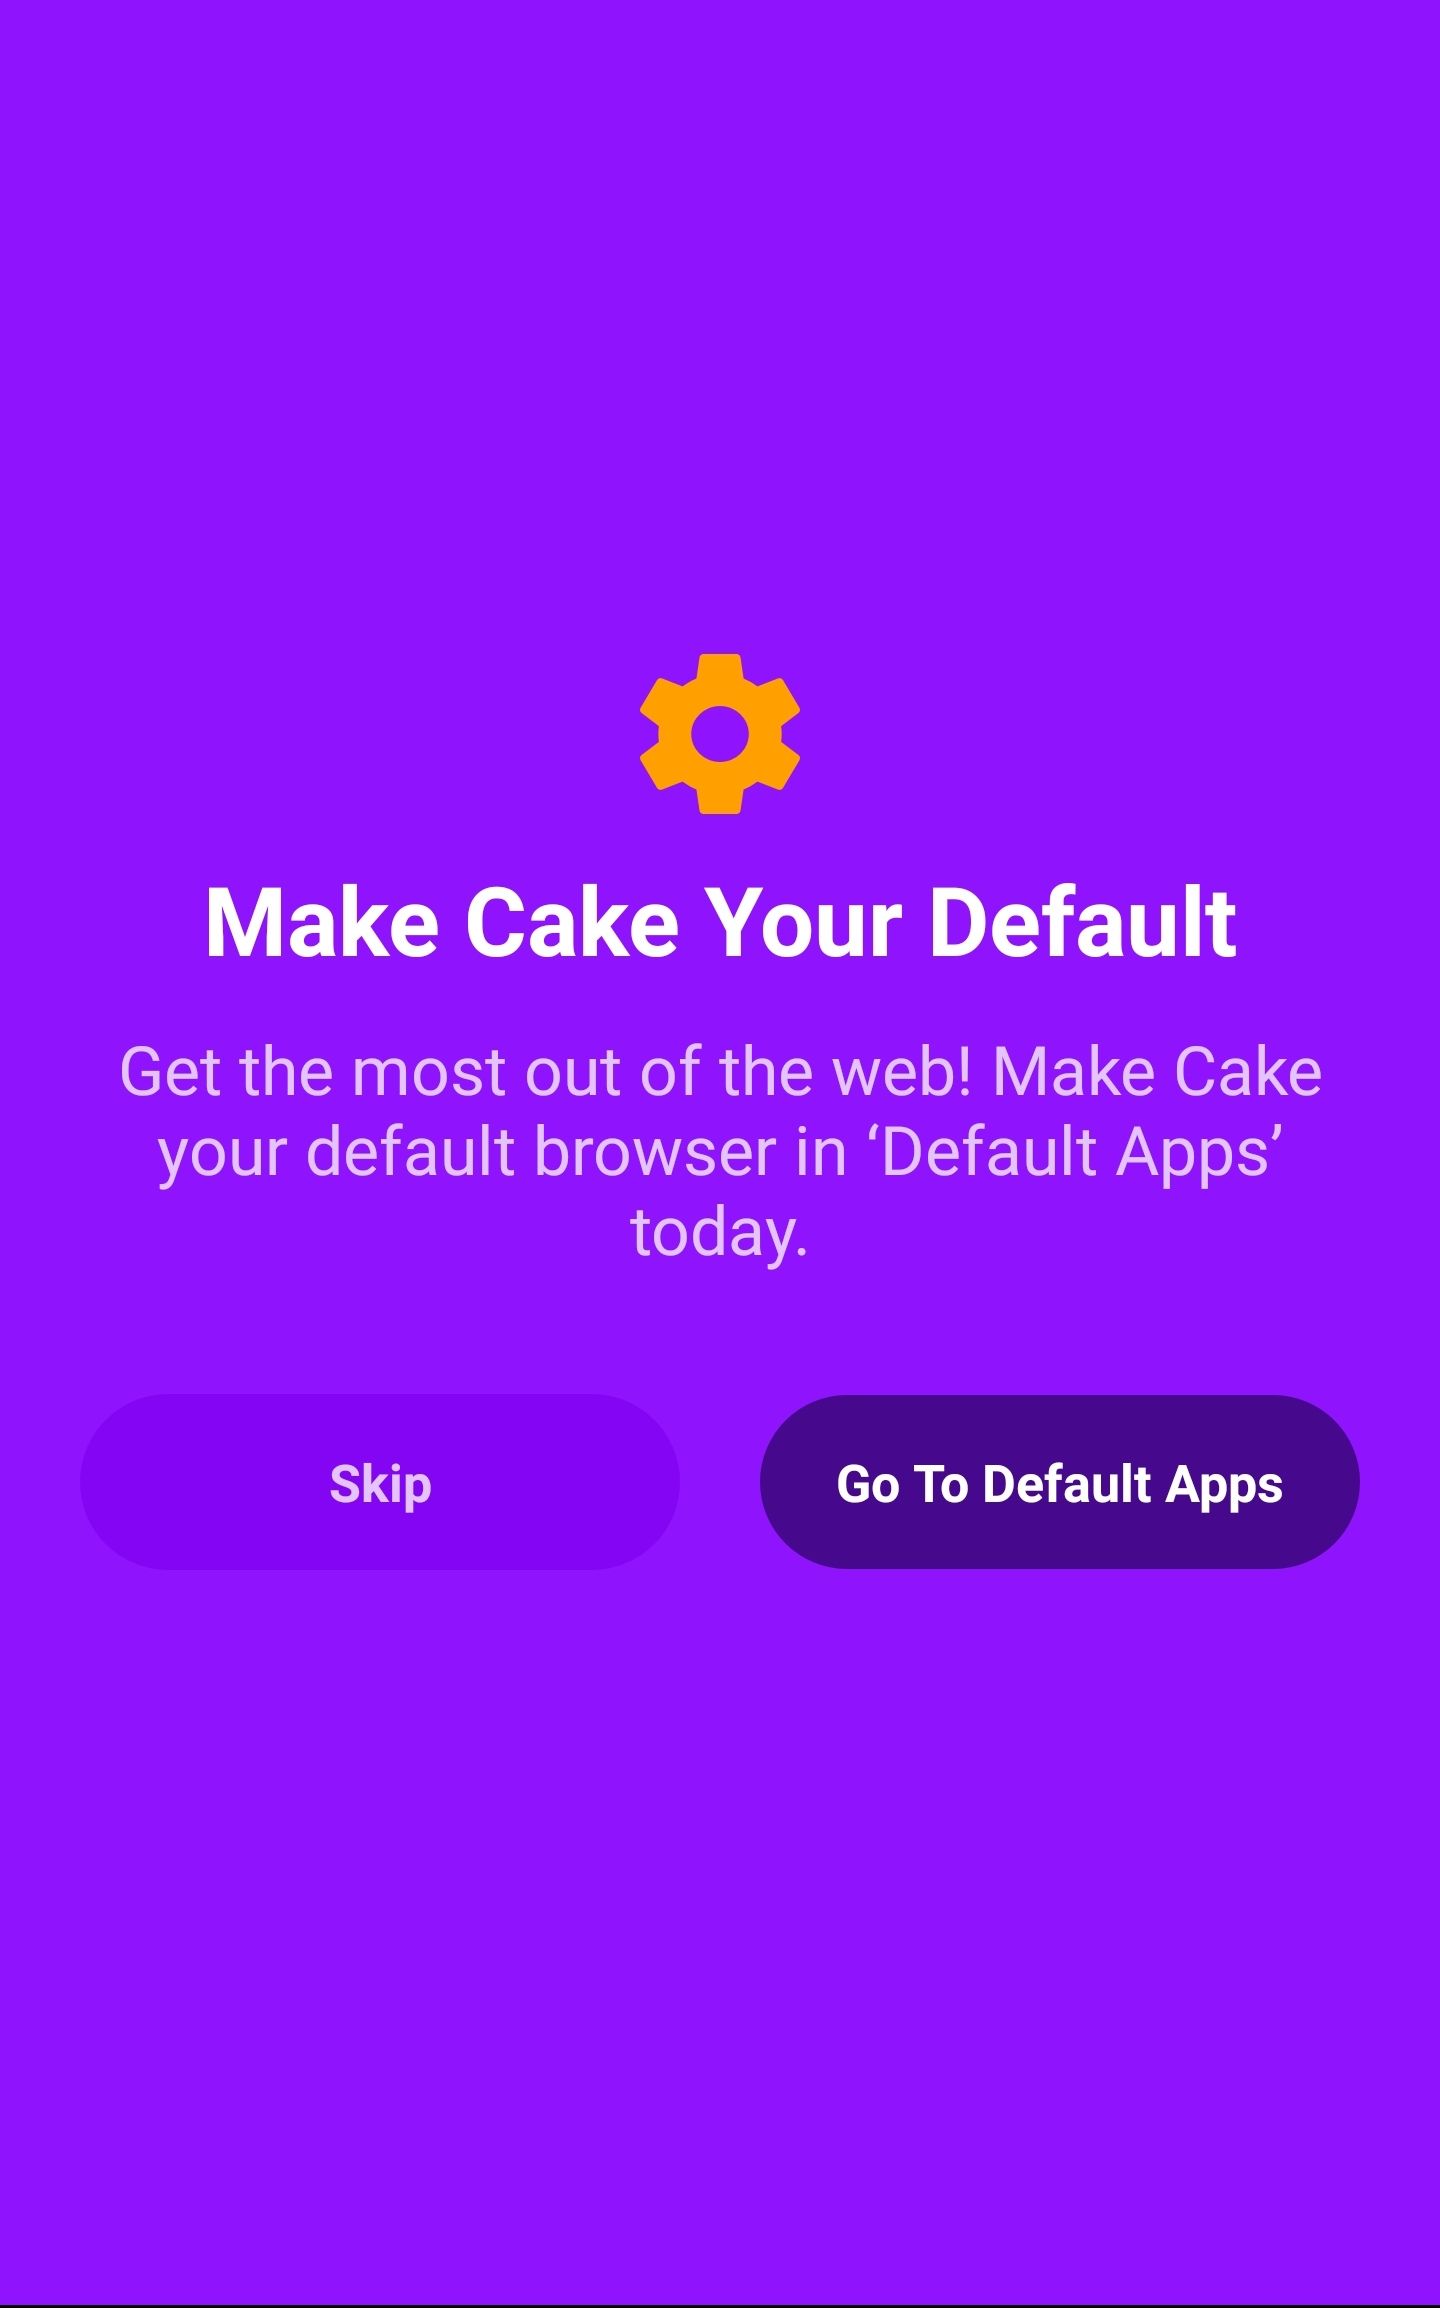 Cake Browser - App Store Screenshots Screenshots | UI Sources